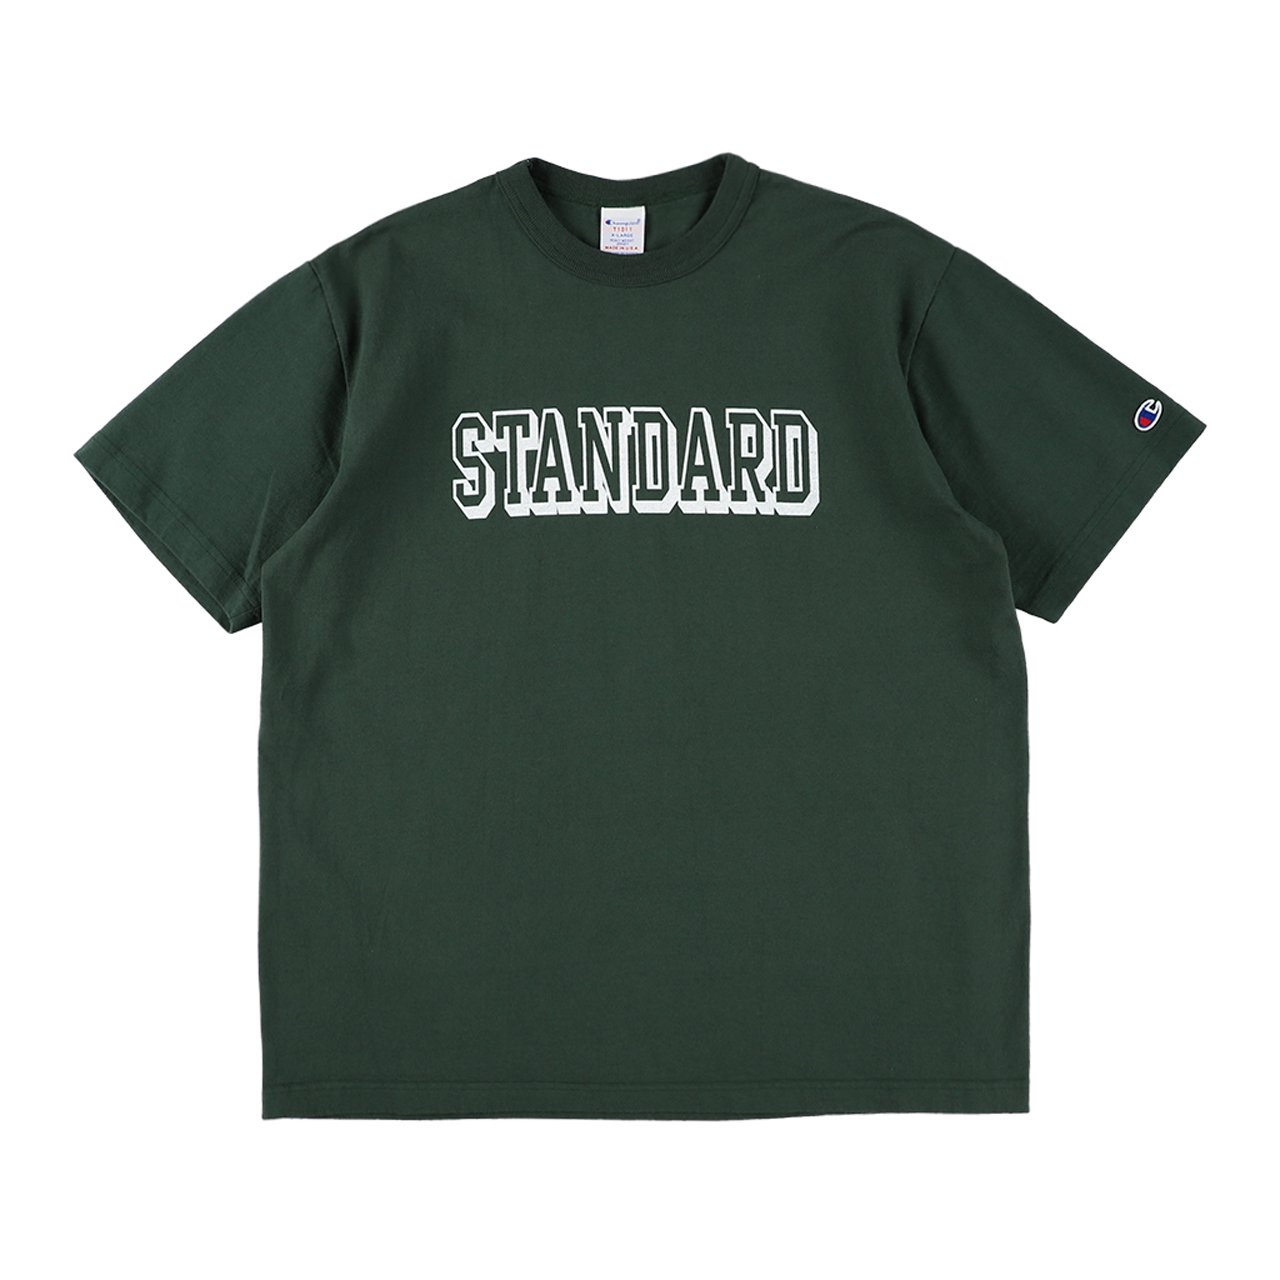 STANDARD CALIFORNIA(スタンダードカリフォルニア)24SS/春夏
Champion×SD T1011
TSOSD120 
チャンピオン
半袖Tシャツ
スタカリ